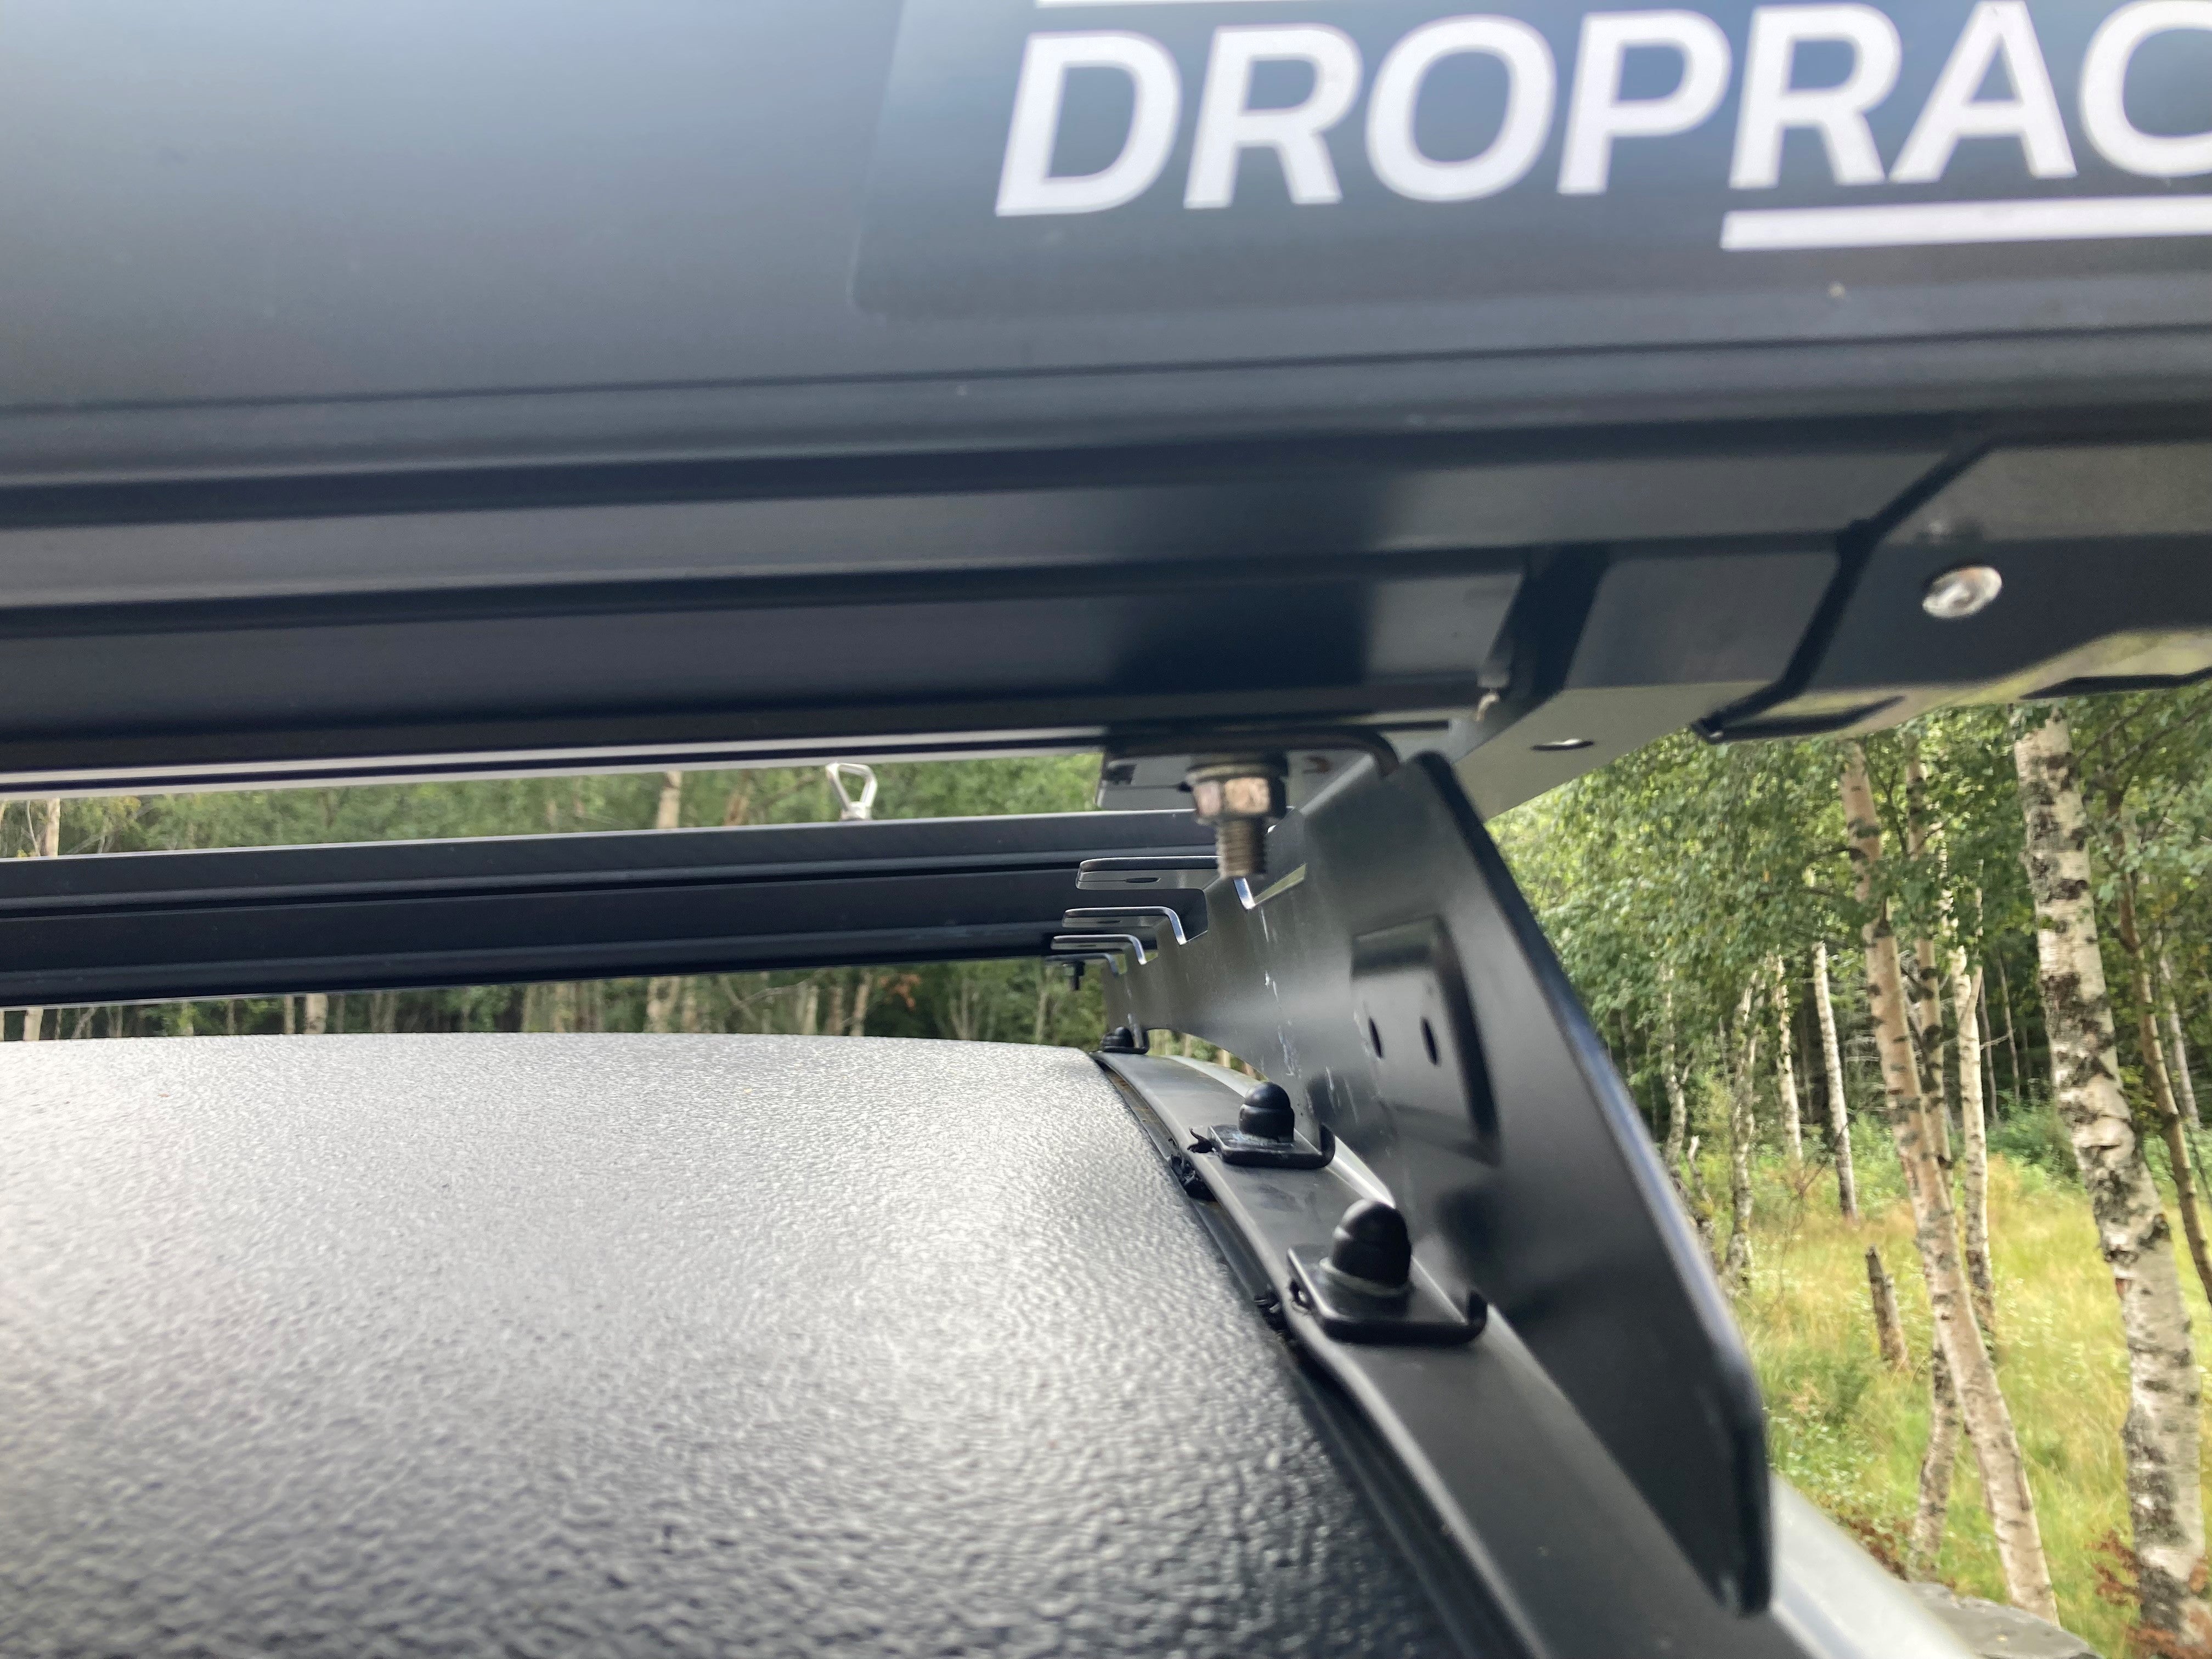 Fitting Dropracks to a Pickup with Naked / Flat Roof – Dropracks